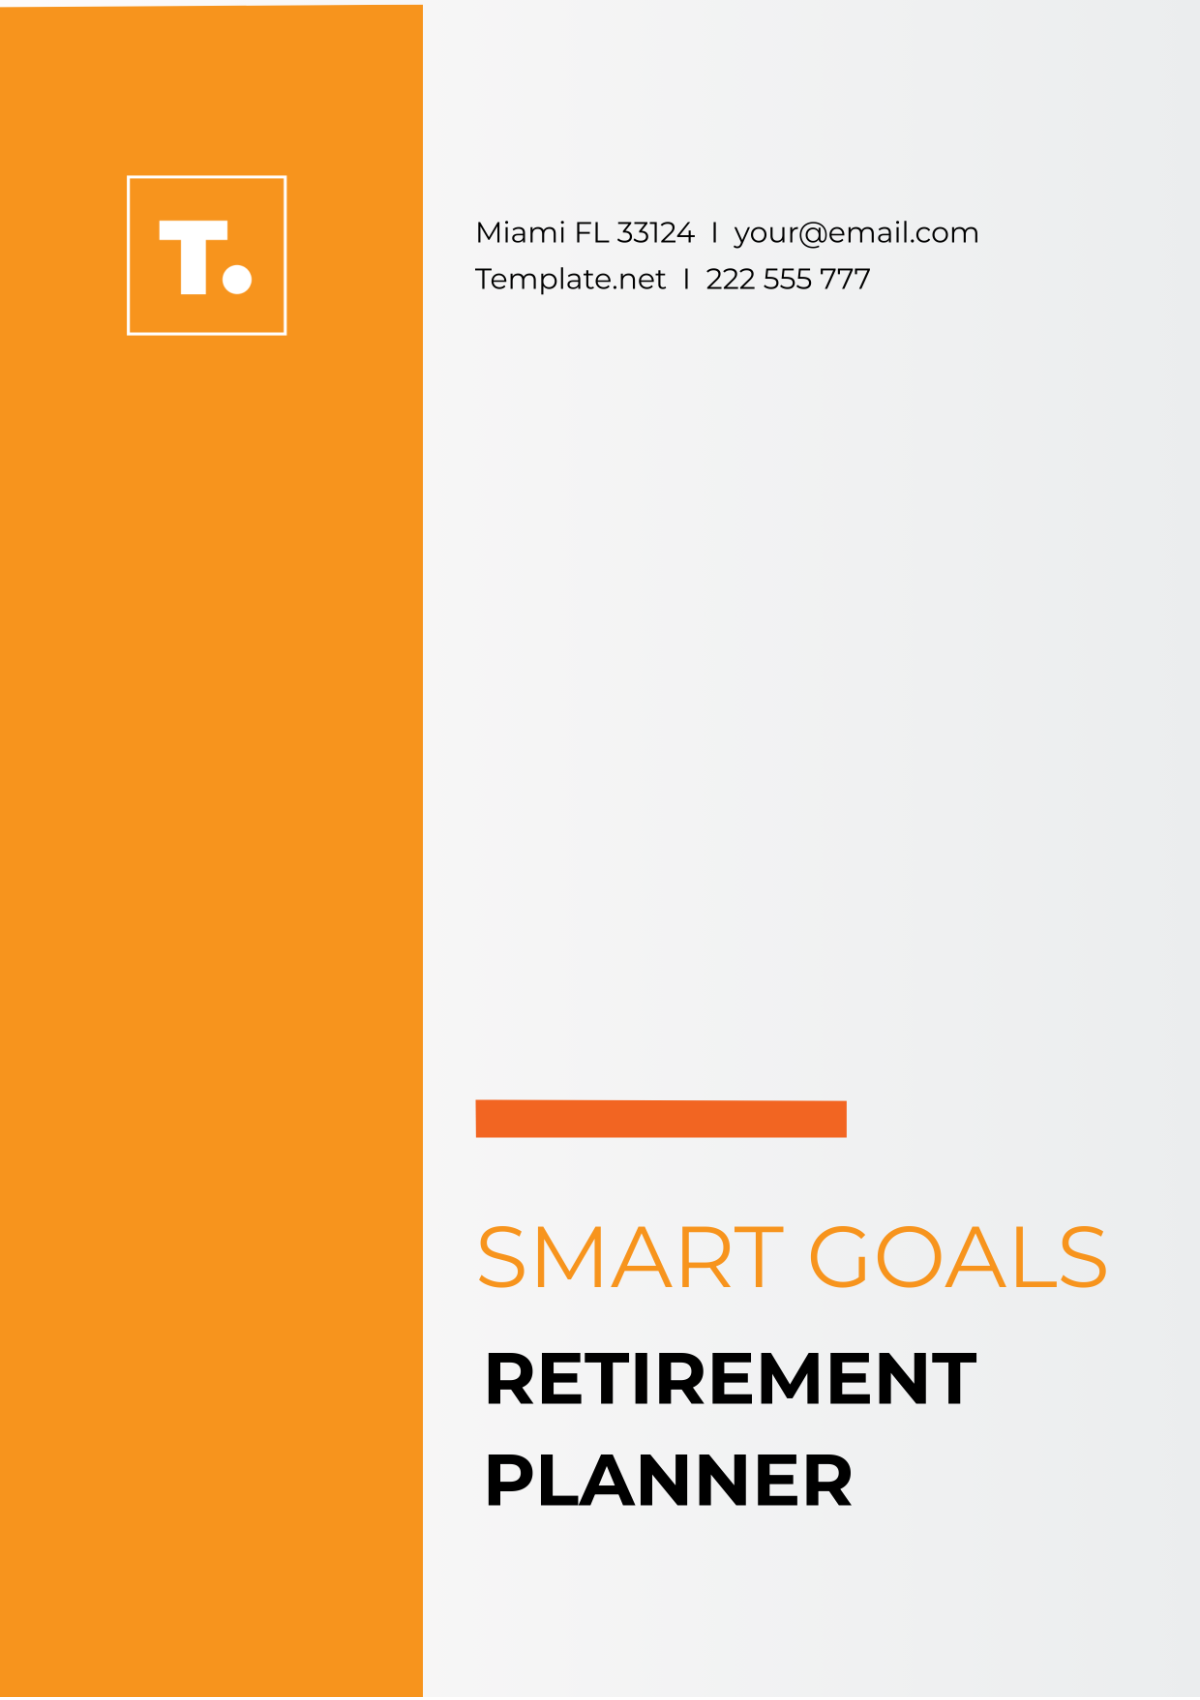 SMART Goals Retirement Planner Template